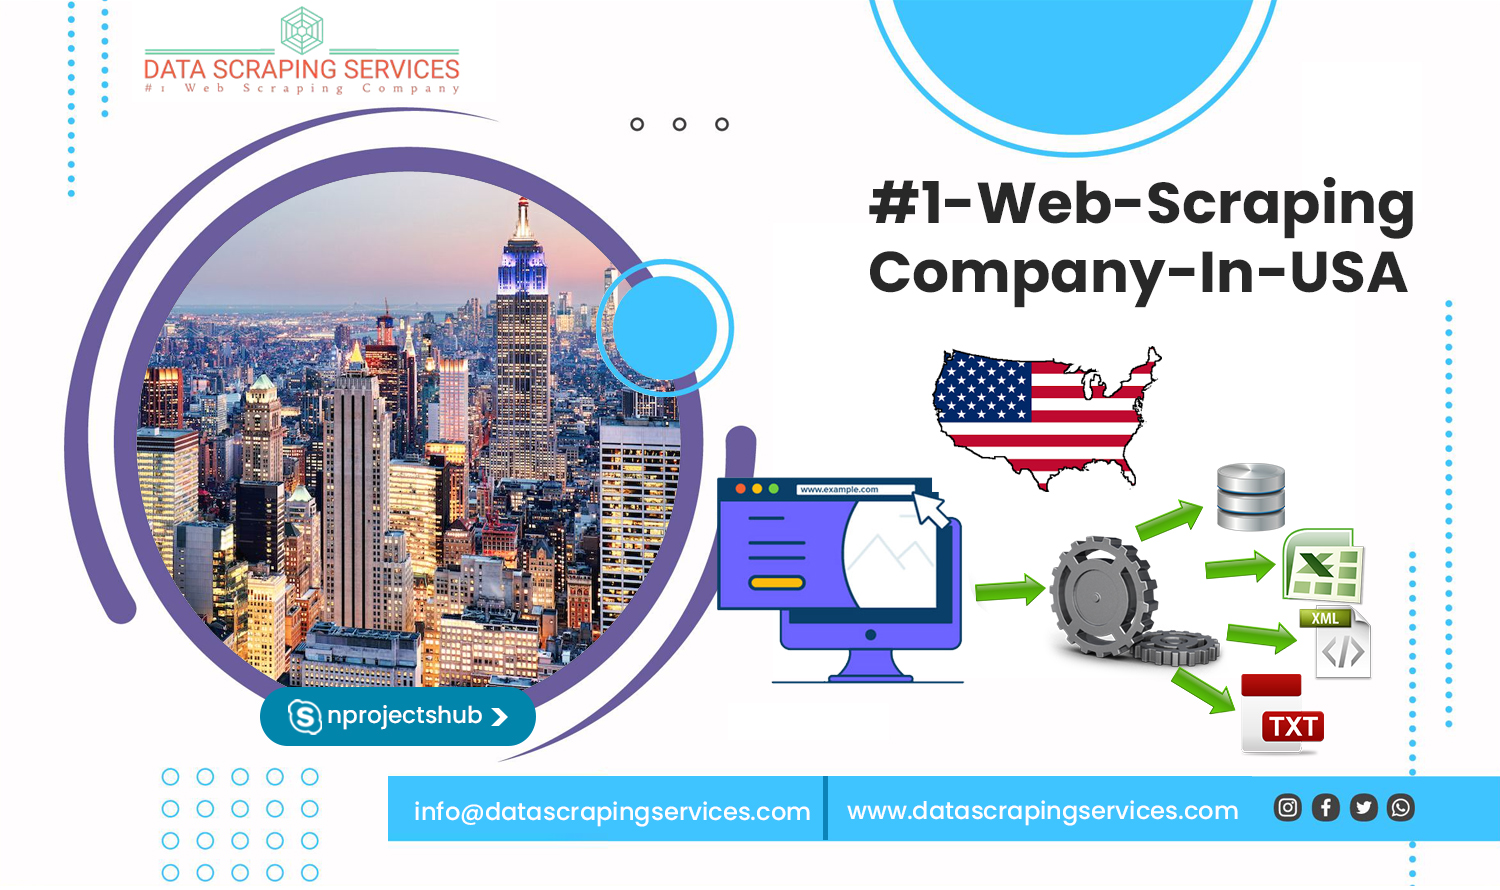 #1 Web Scraping Company In USA